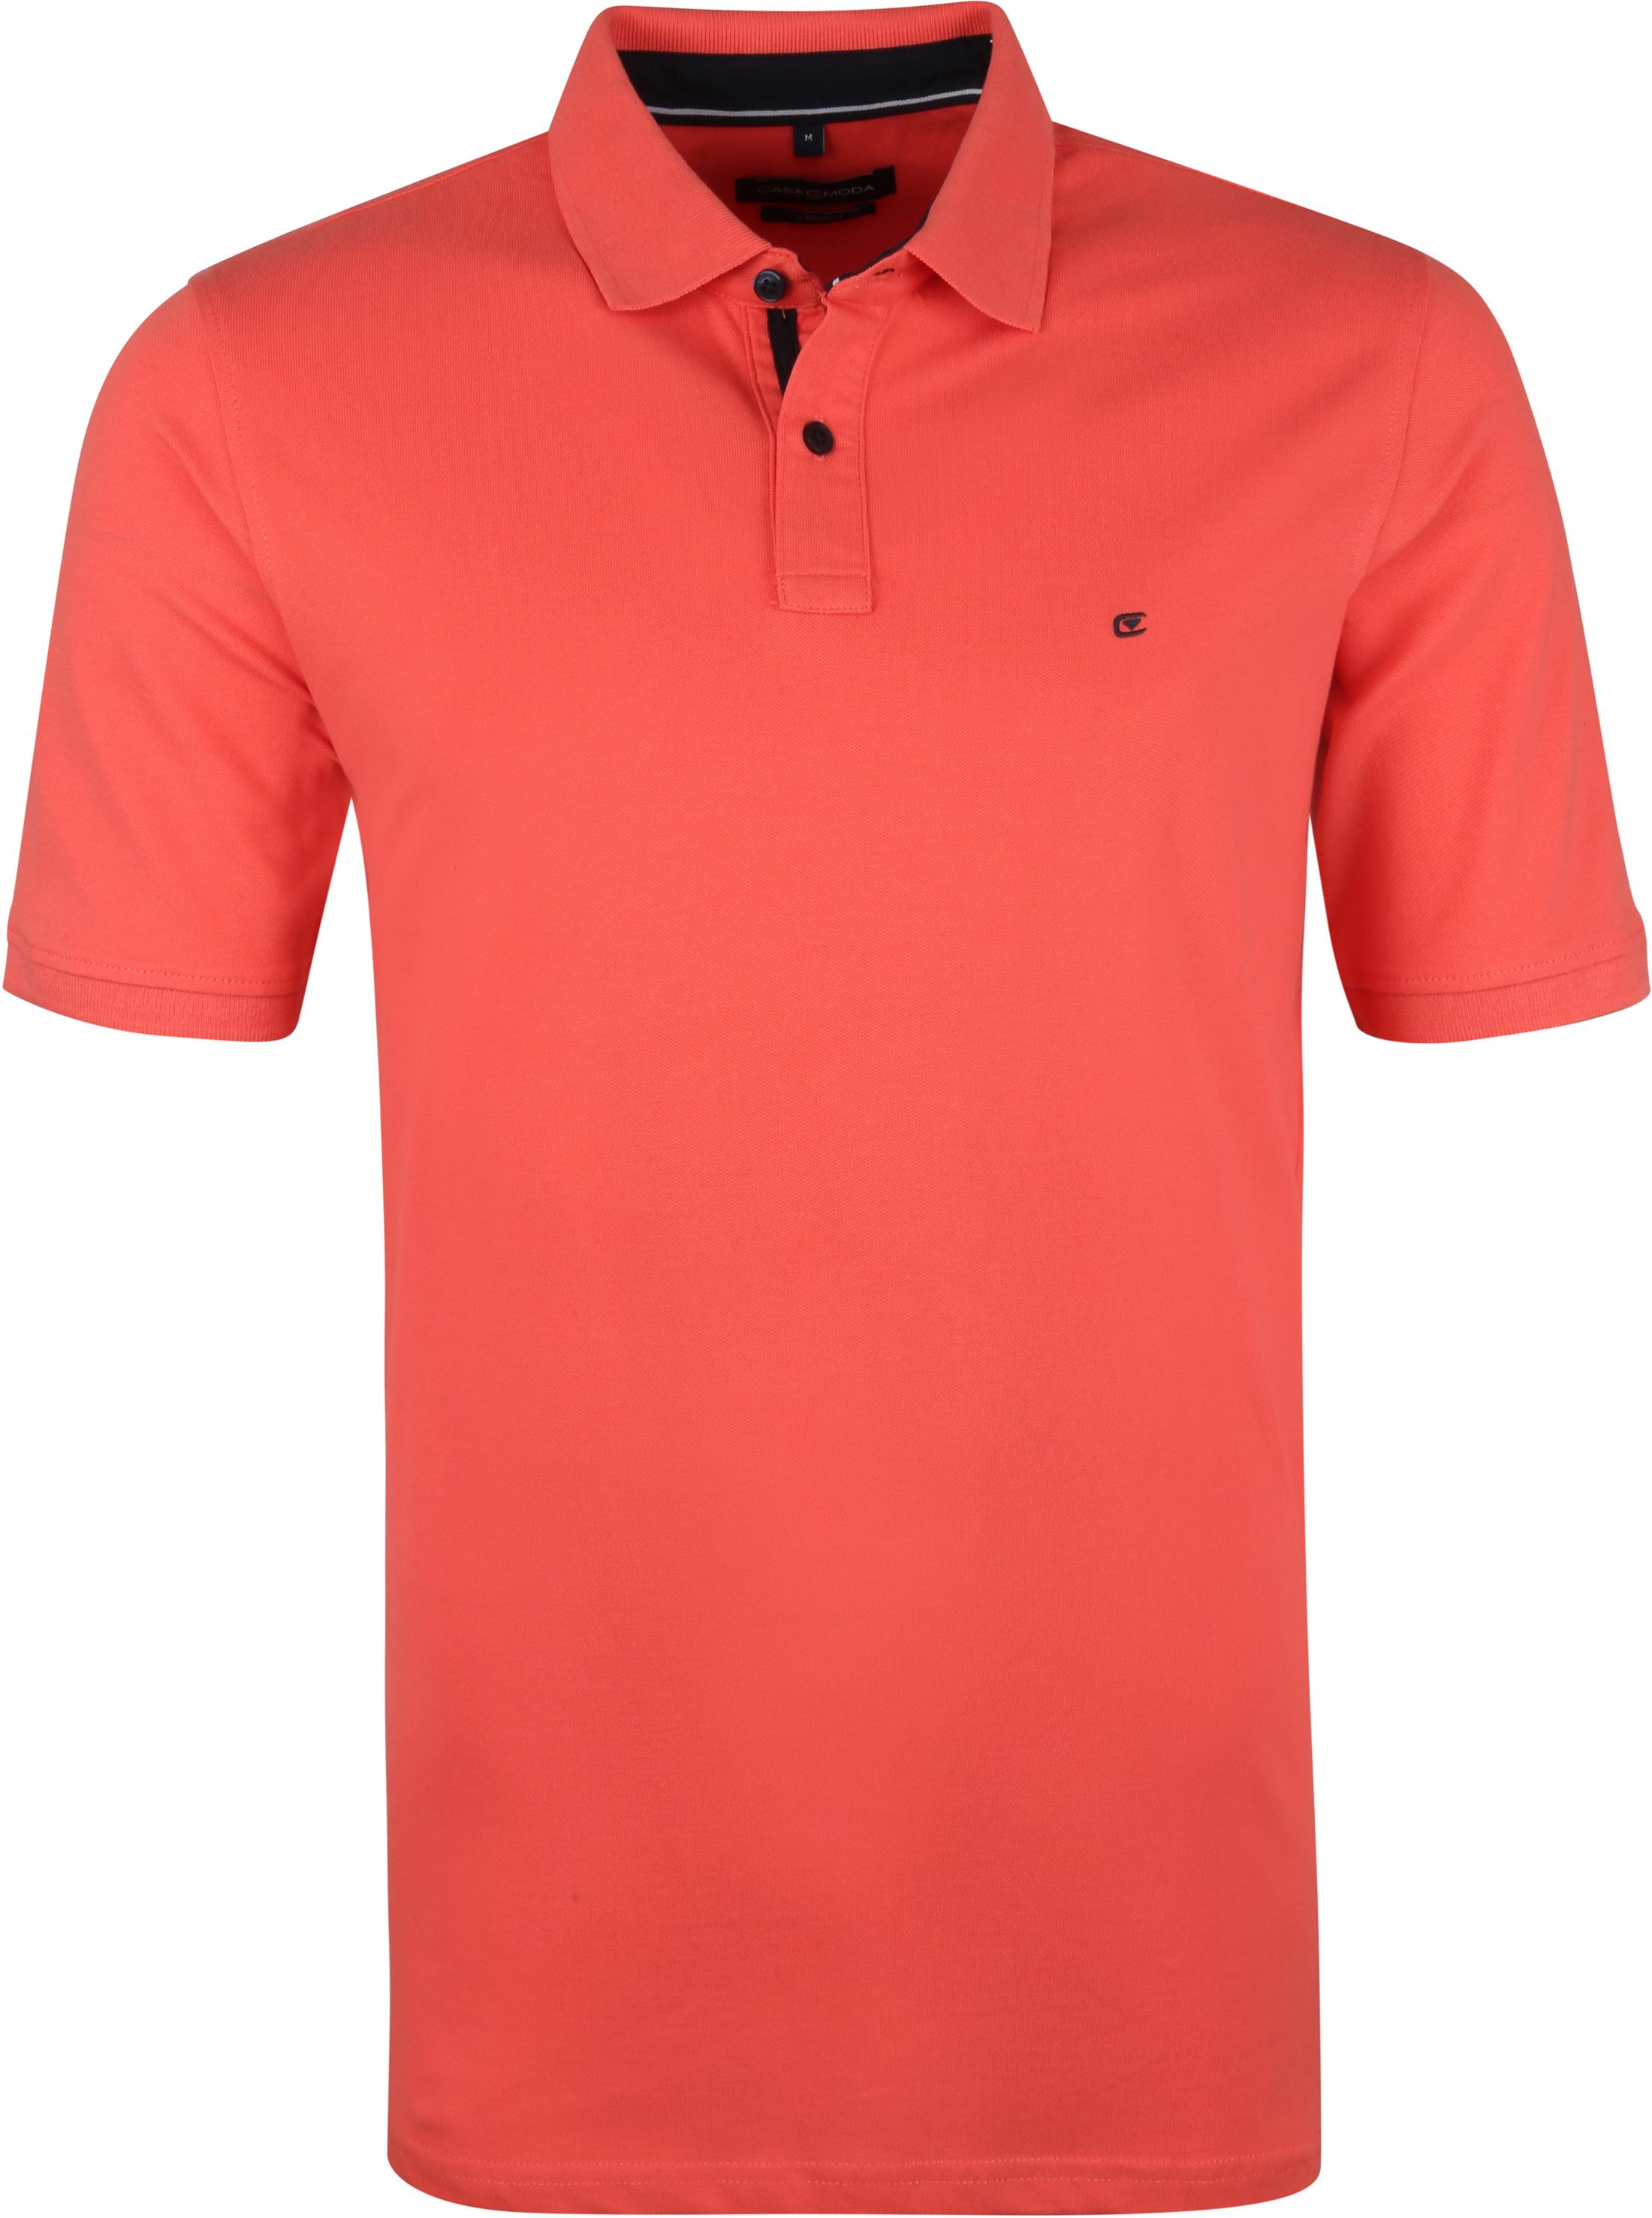 Casa Moda Polo Shirt Stretch Red size 3XL